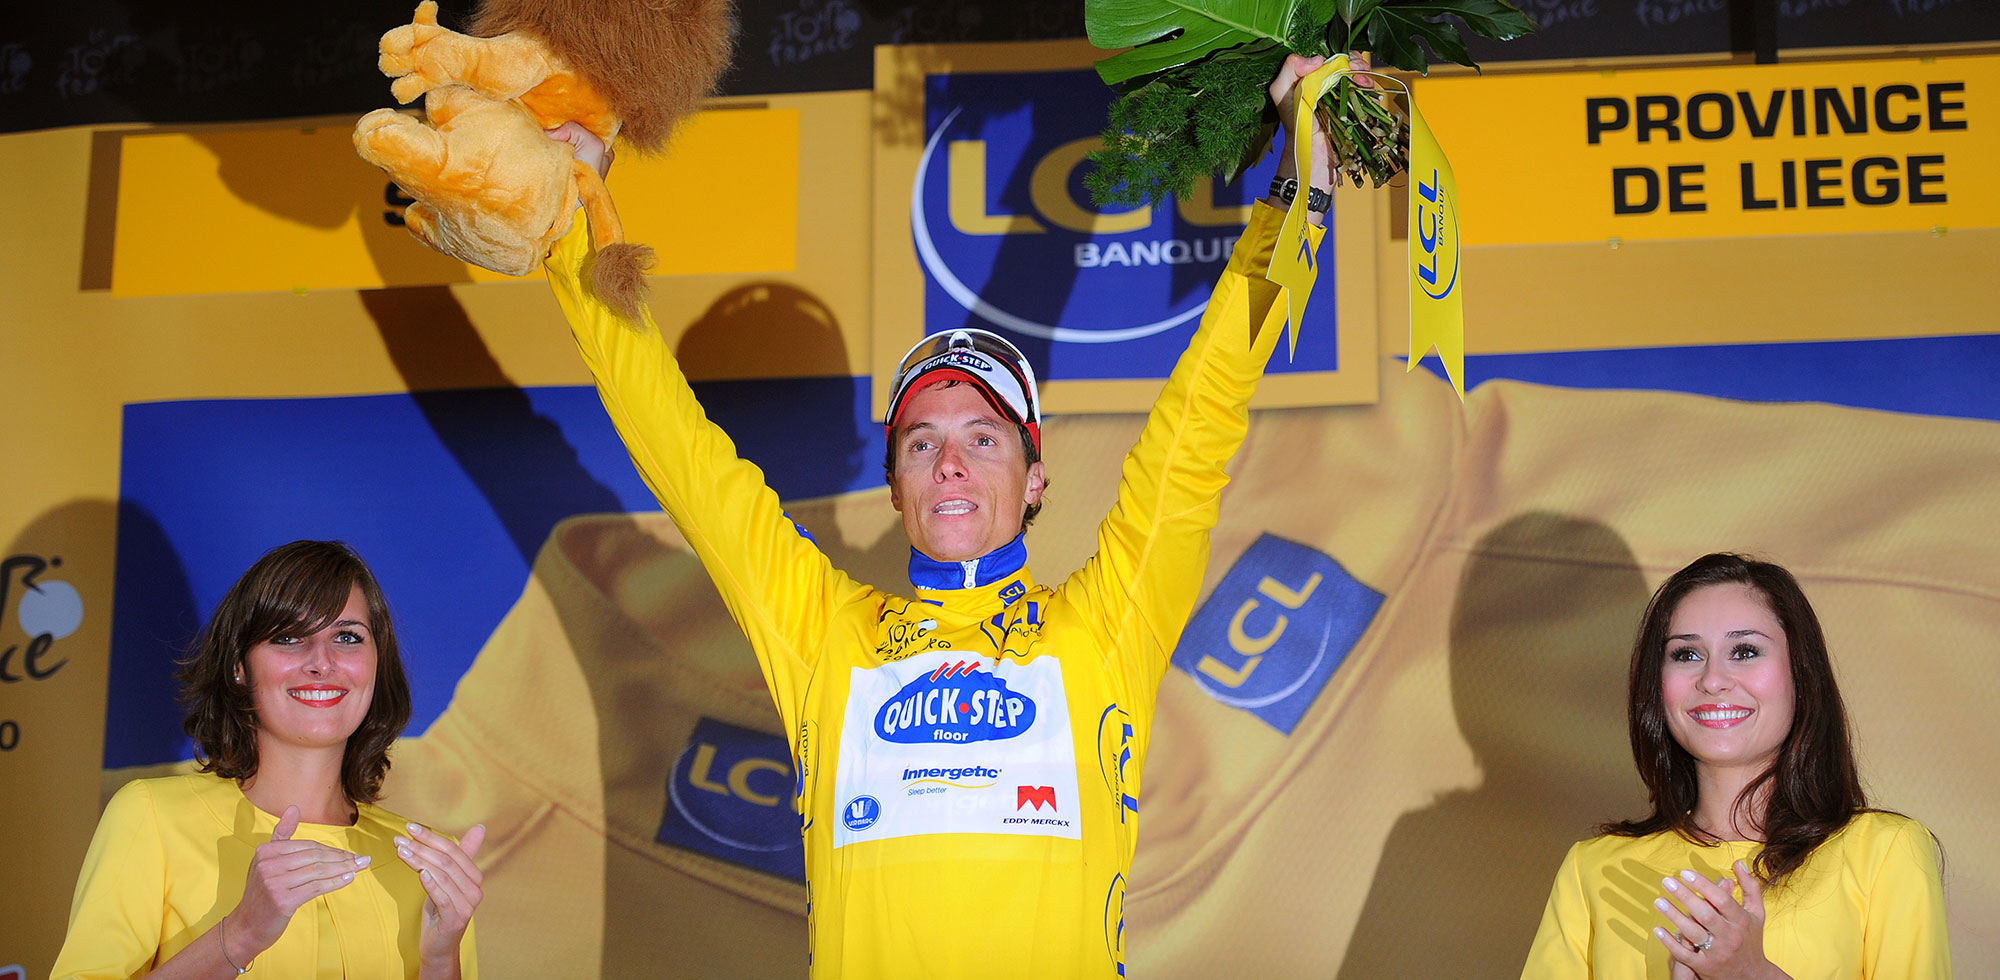 Yellow jersey Tour de France